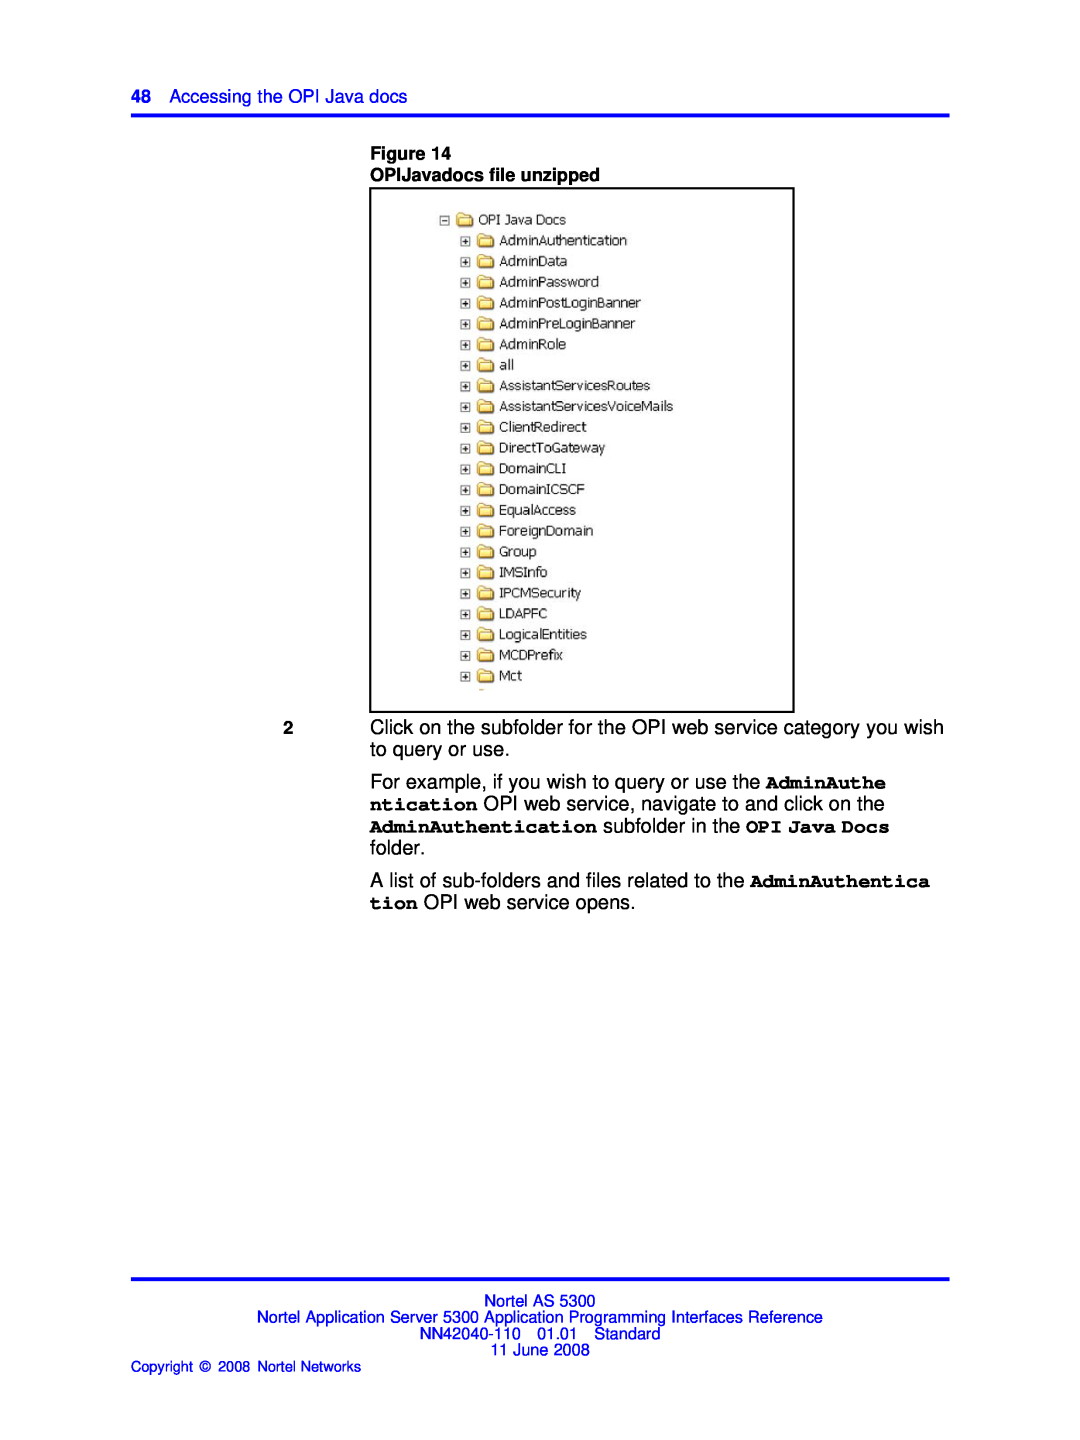 Nortel Networks AS 5300 manual AdminAuthentication subfolder in the OPI Java Docs folder, OPIJavadocs file unzipped 